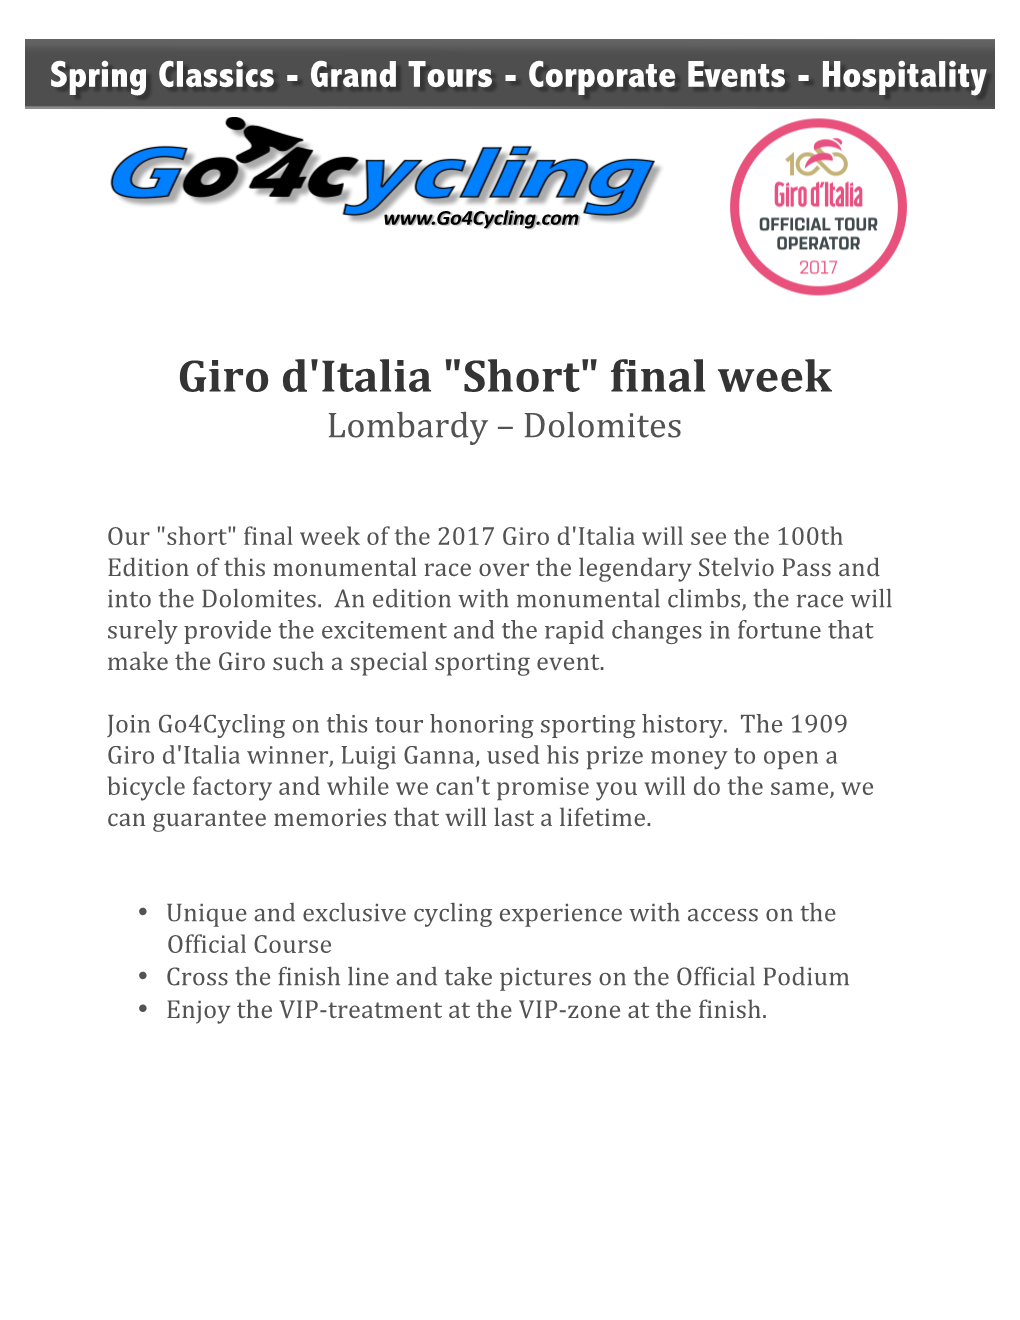 Giro D'italia "Short" Final Week Lombardy – Dolomites